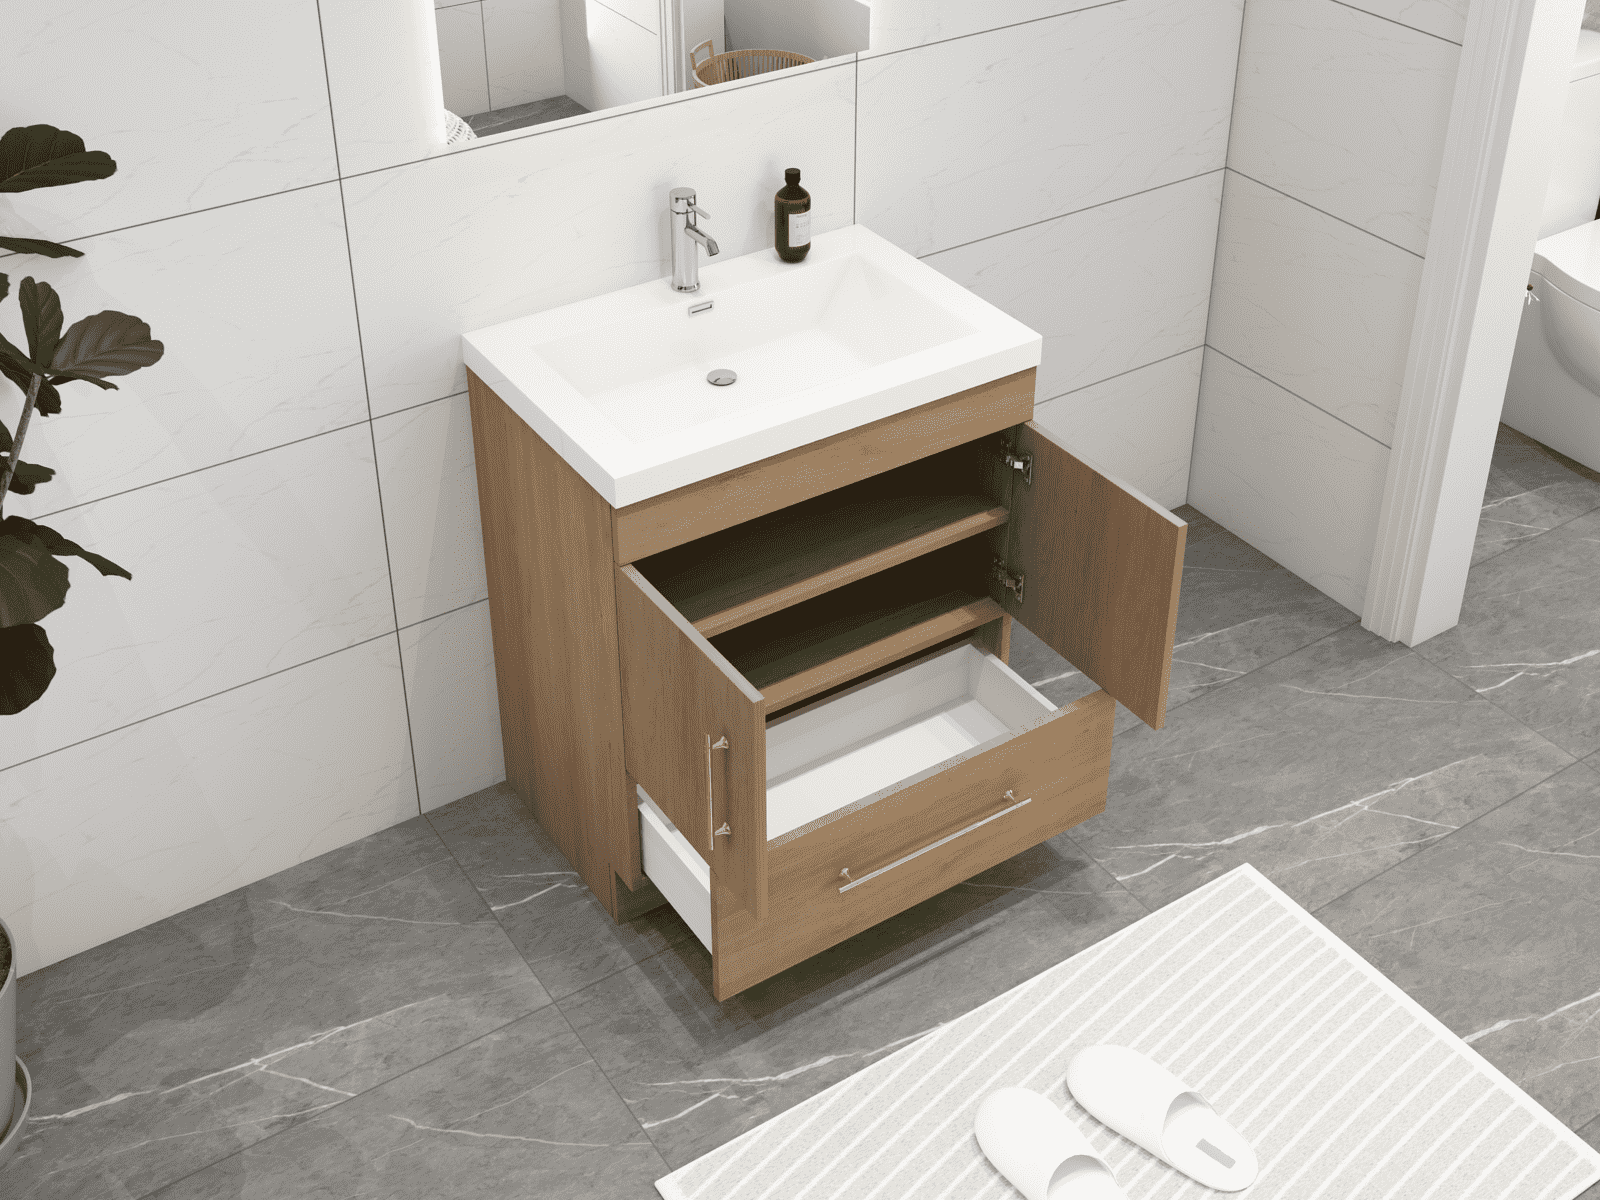 Elsa 30" Freestanding Bathroom Vanity with Reinforced Acrylic Sink in White Oak | Better Vanity